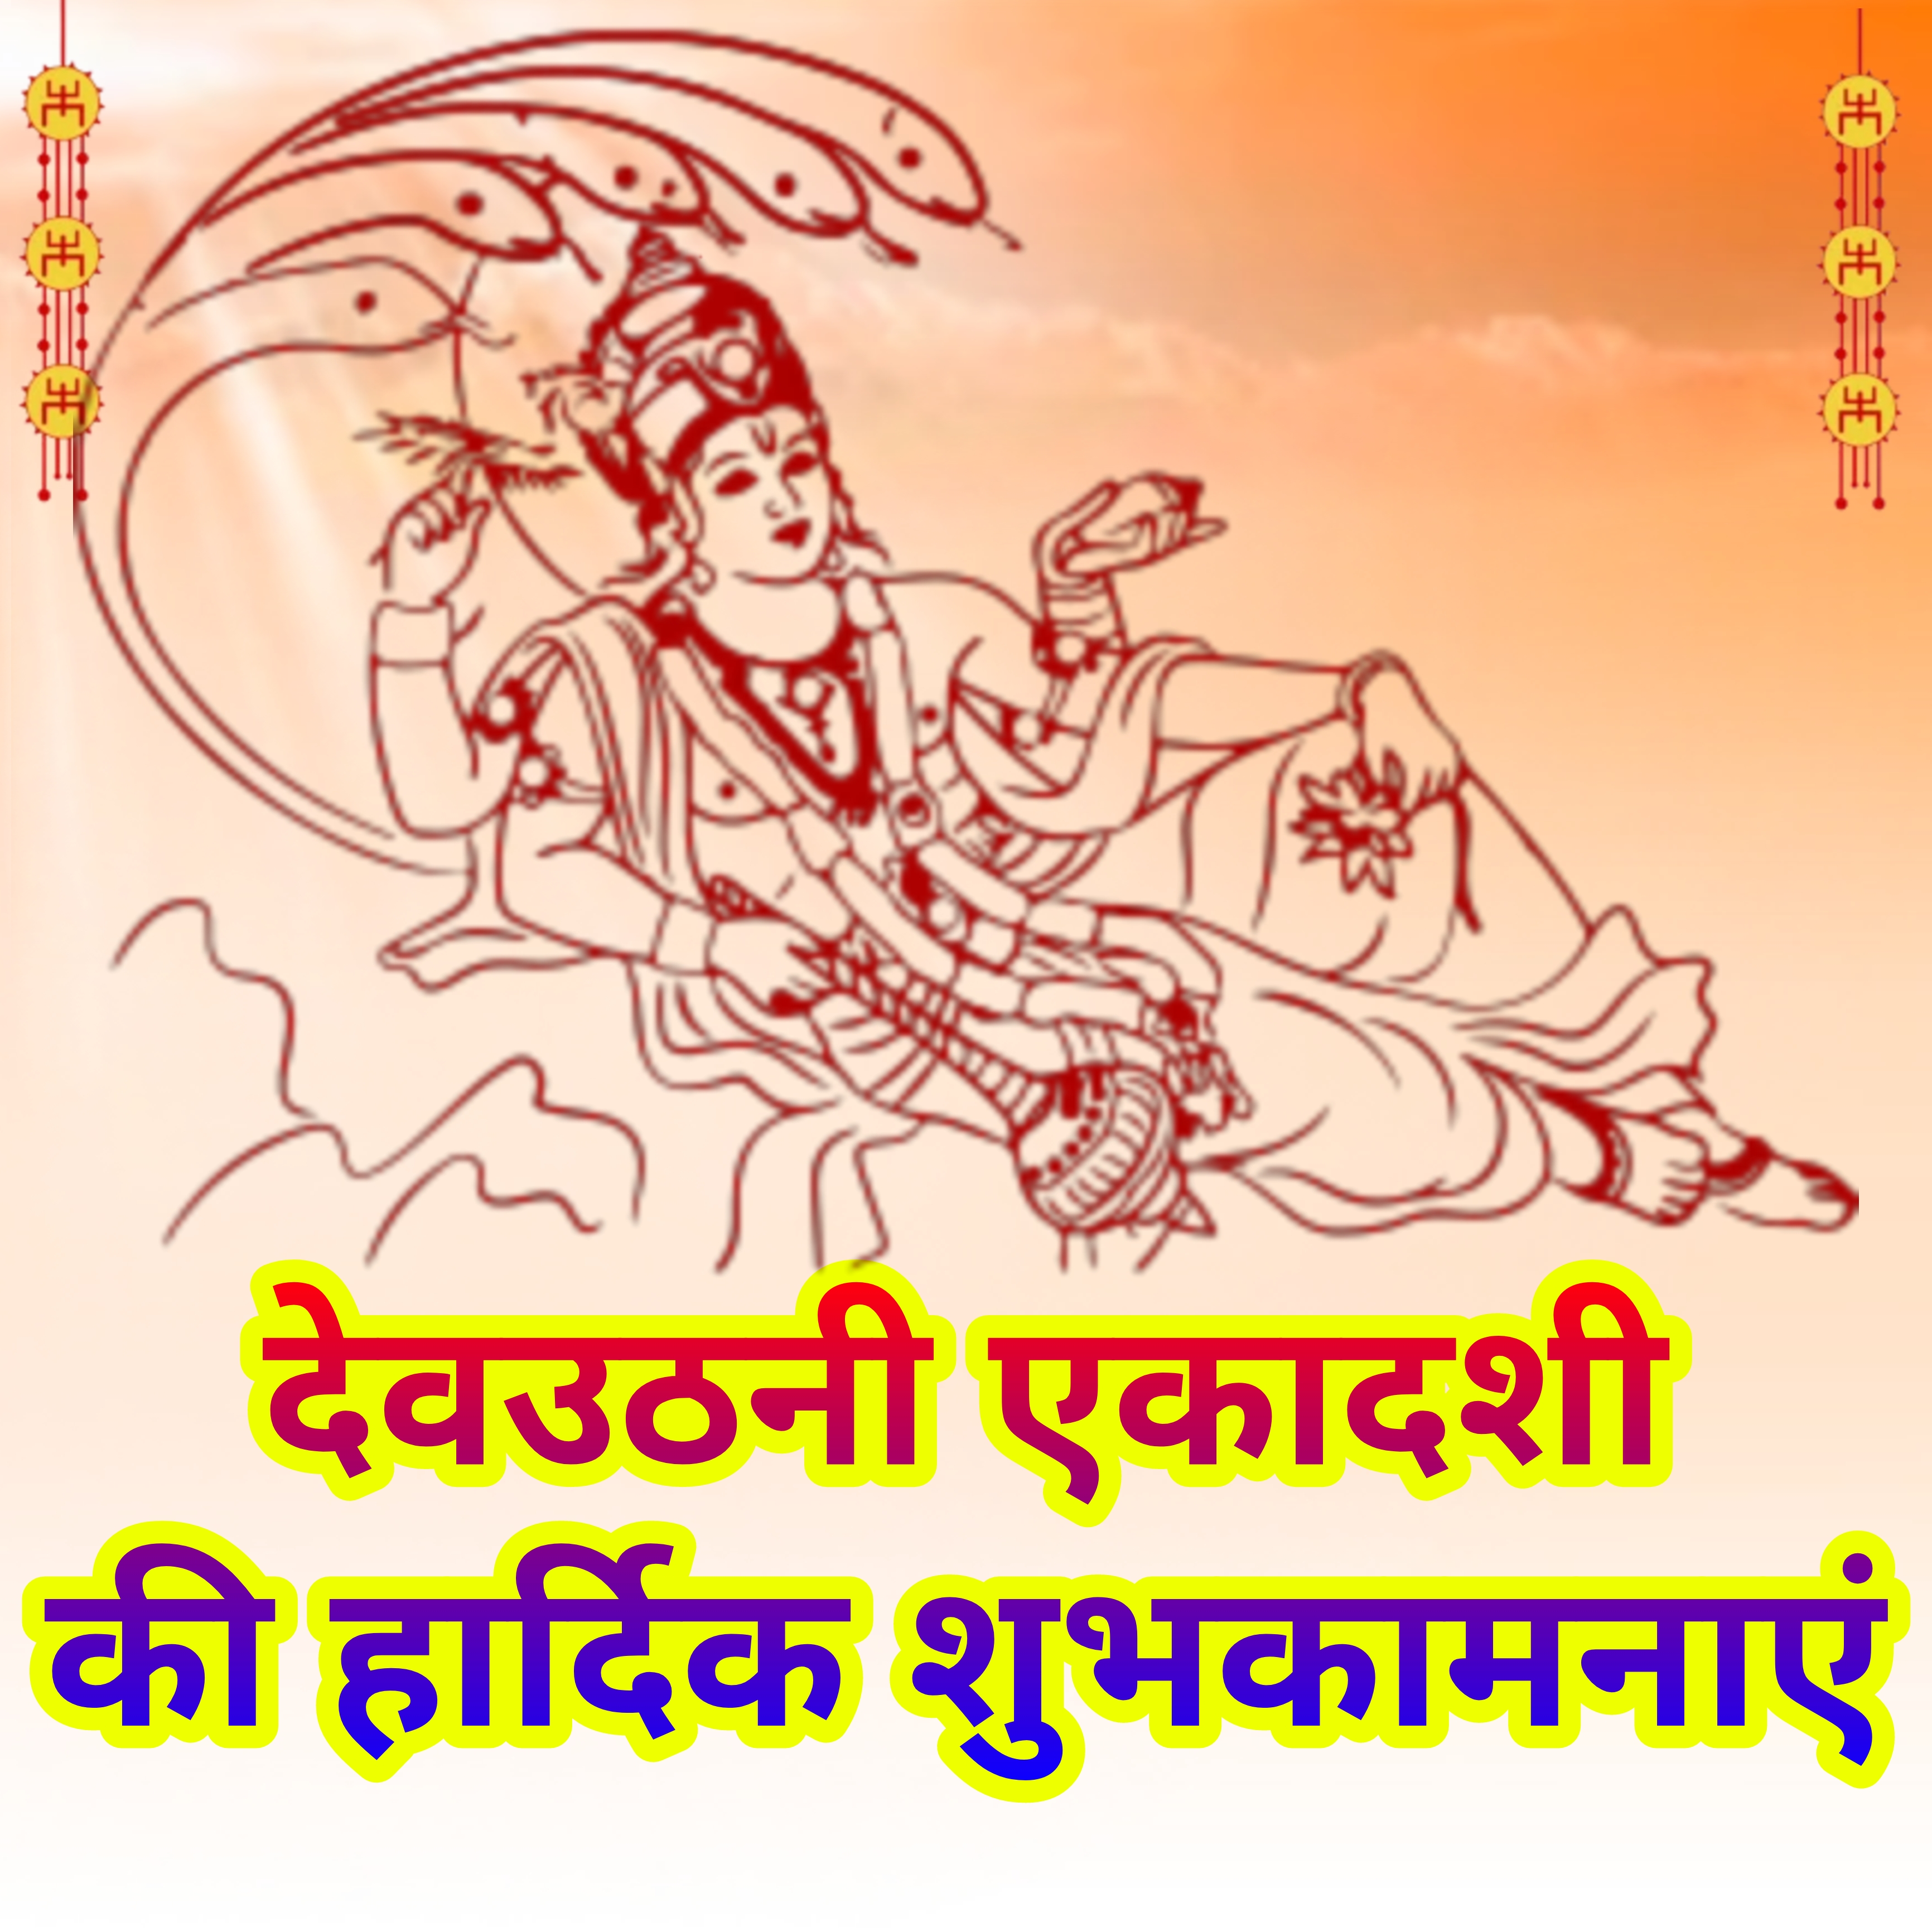 Happy Dev Uthani ekadashi ki Hardik Shubhkamnaye | देवउठनी एकादशी की हार्दिक शुभकामनाएं